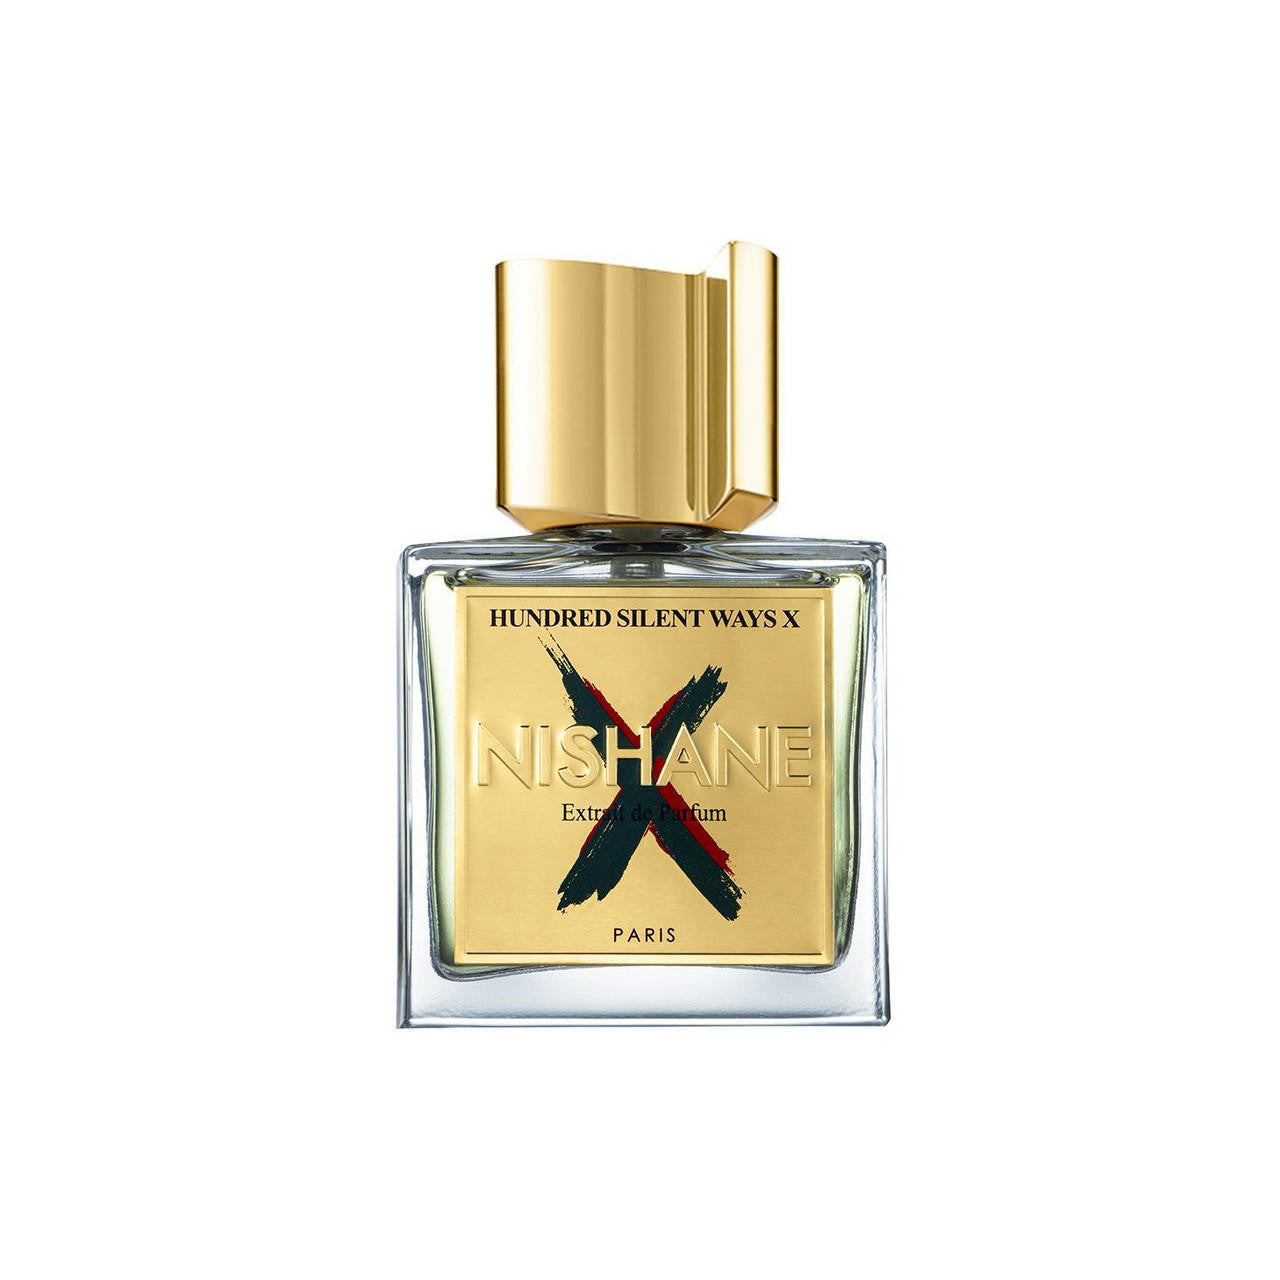  Nishane HUNDRED SILENT WAYS X Extrait de Parfum 